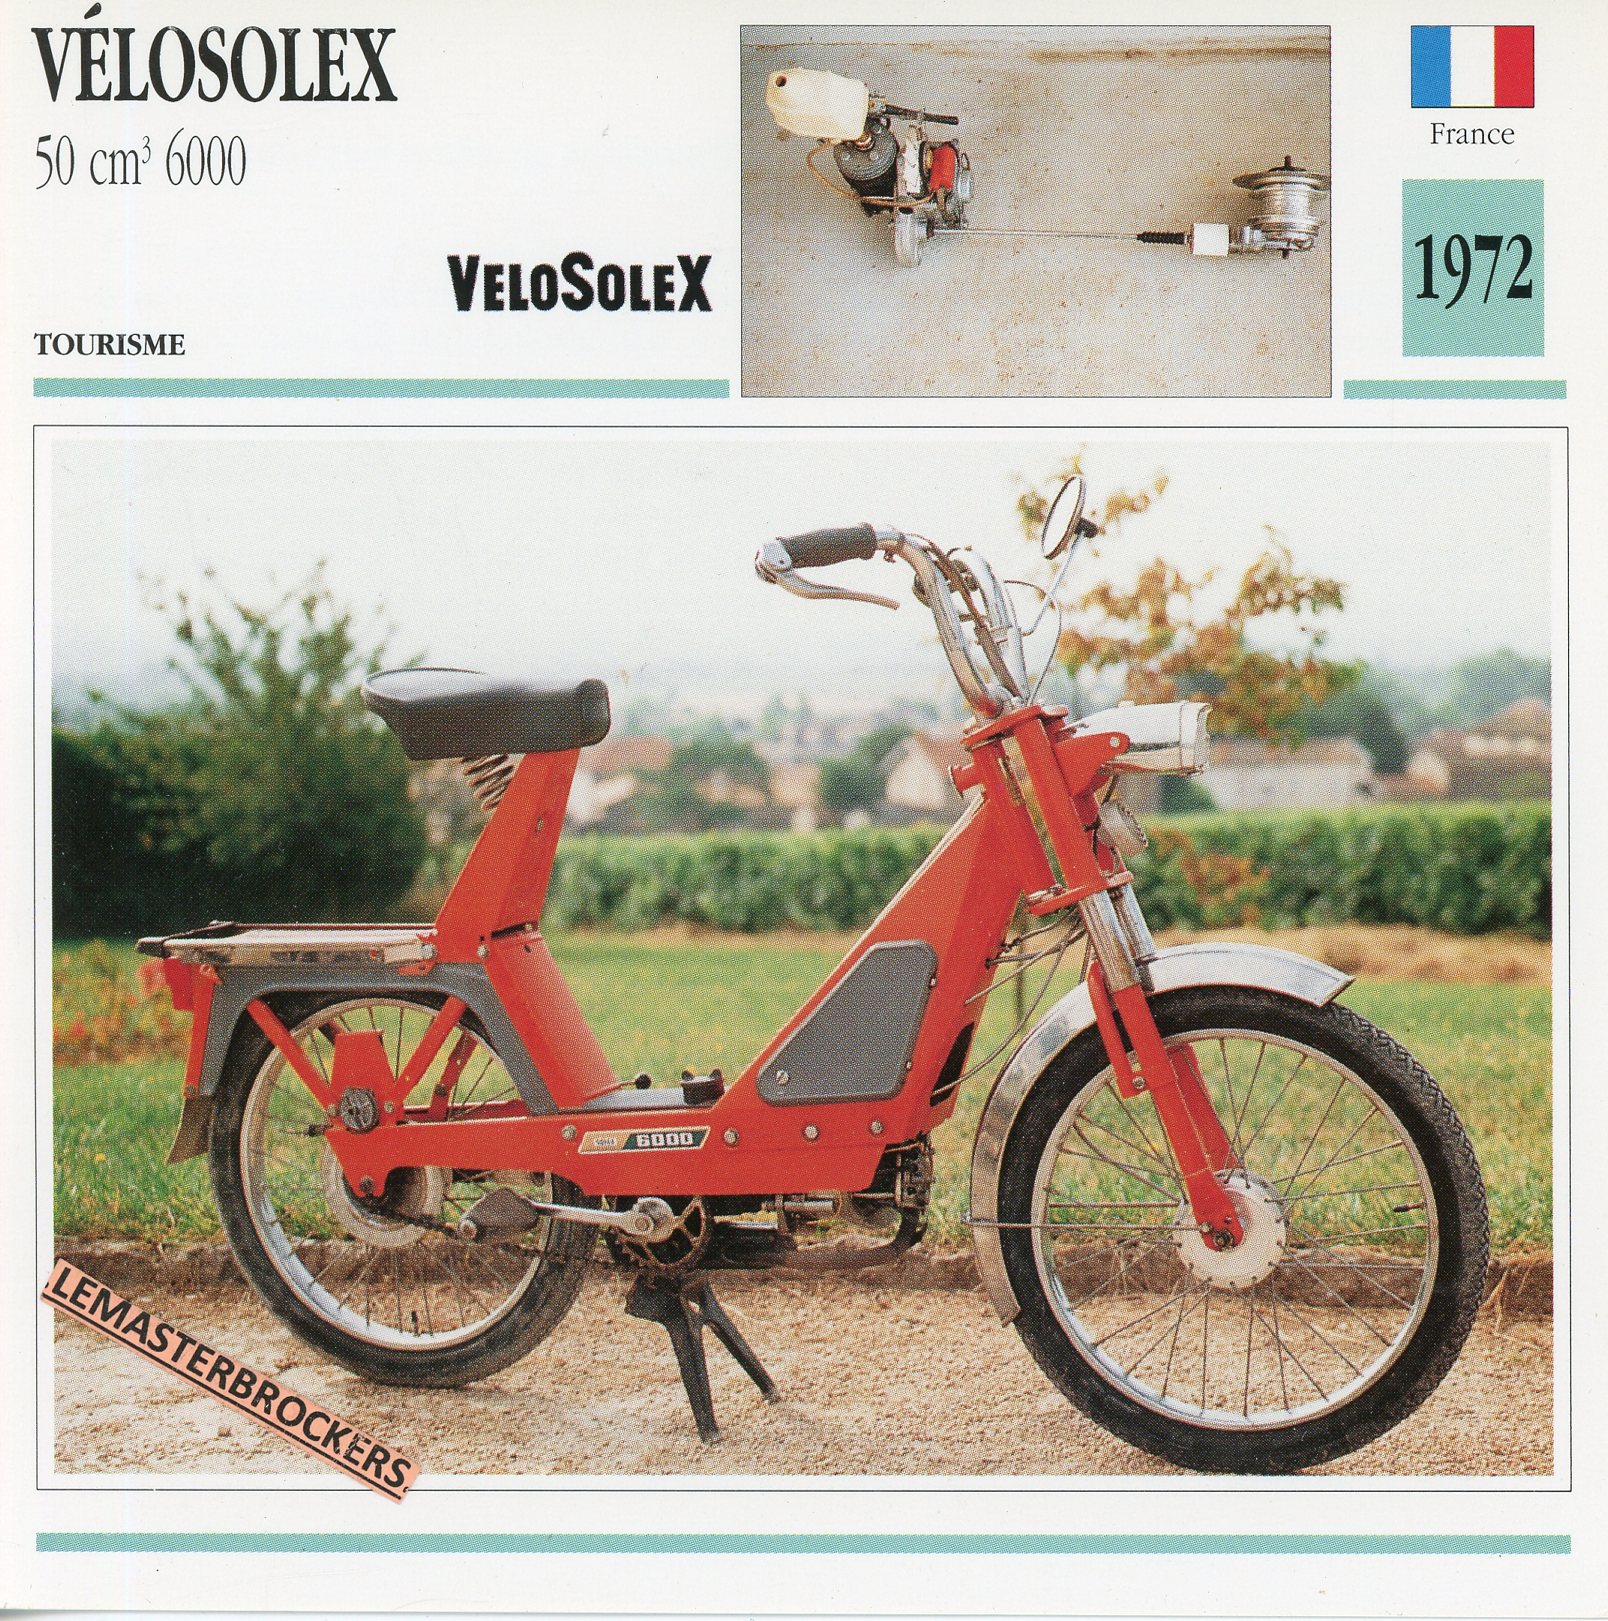 VELOSOLEX 6000 - FICHE CYCLOMOTEUR SOLEX 50 MOTORCYCLE CARDS ATLAS FRENCH